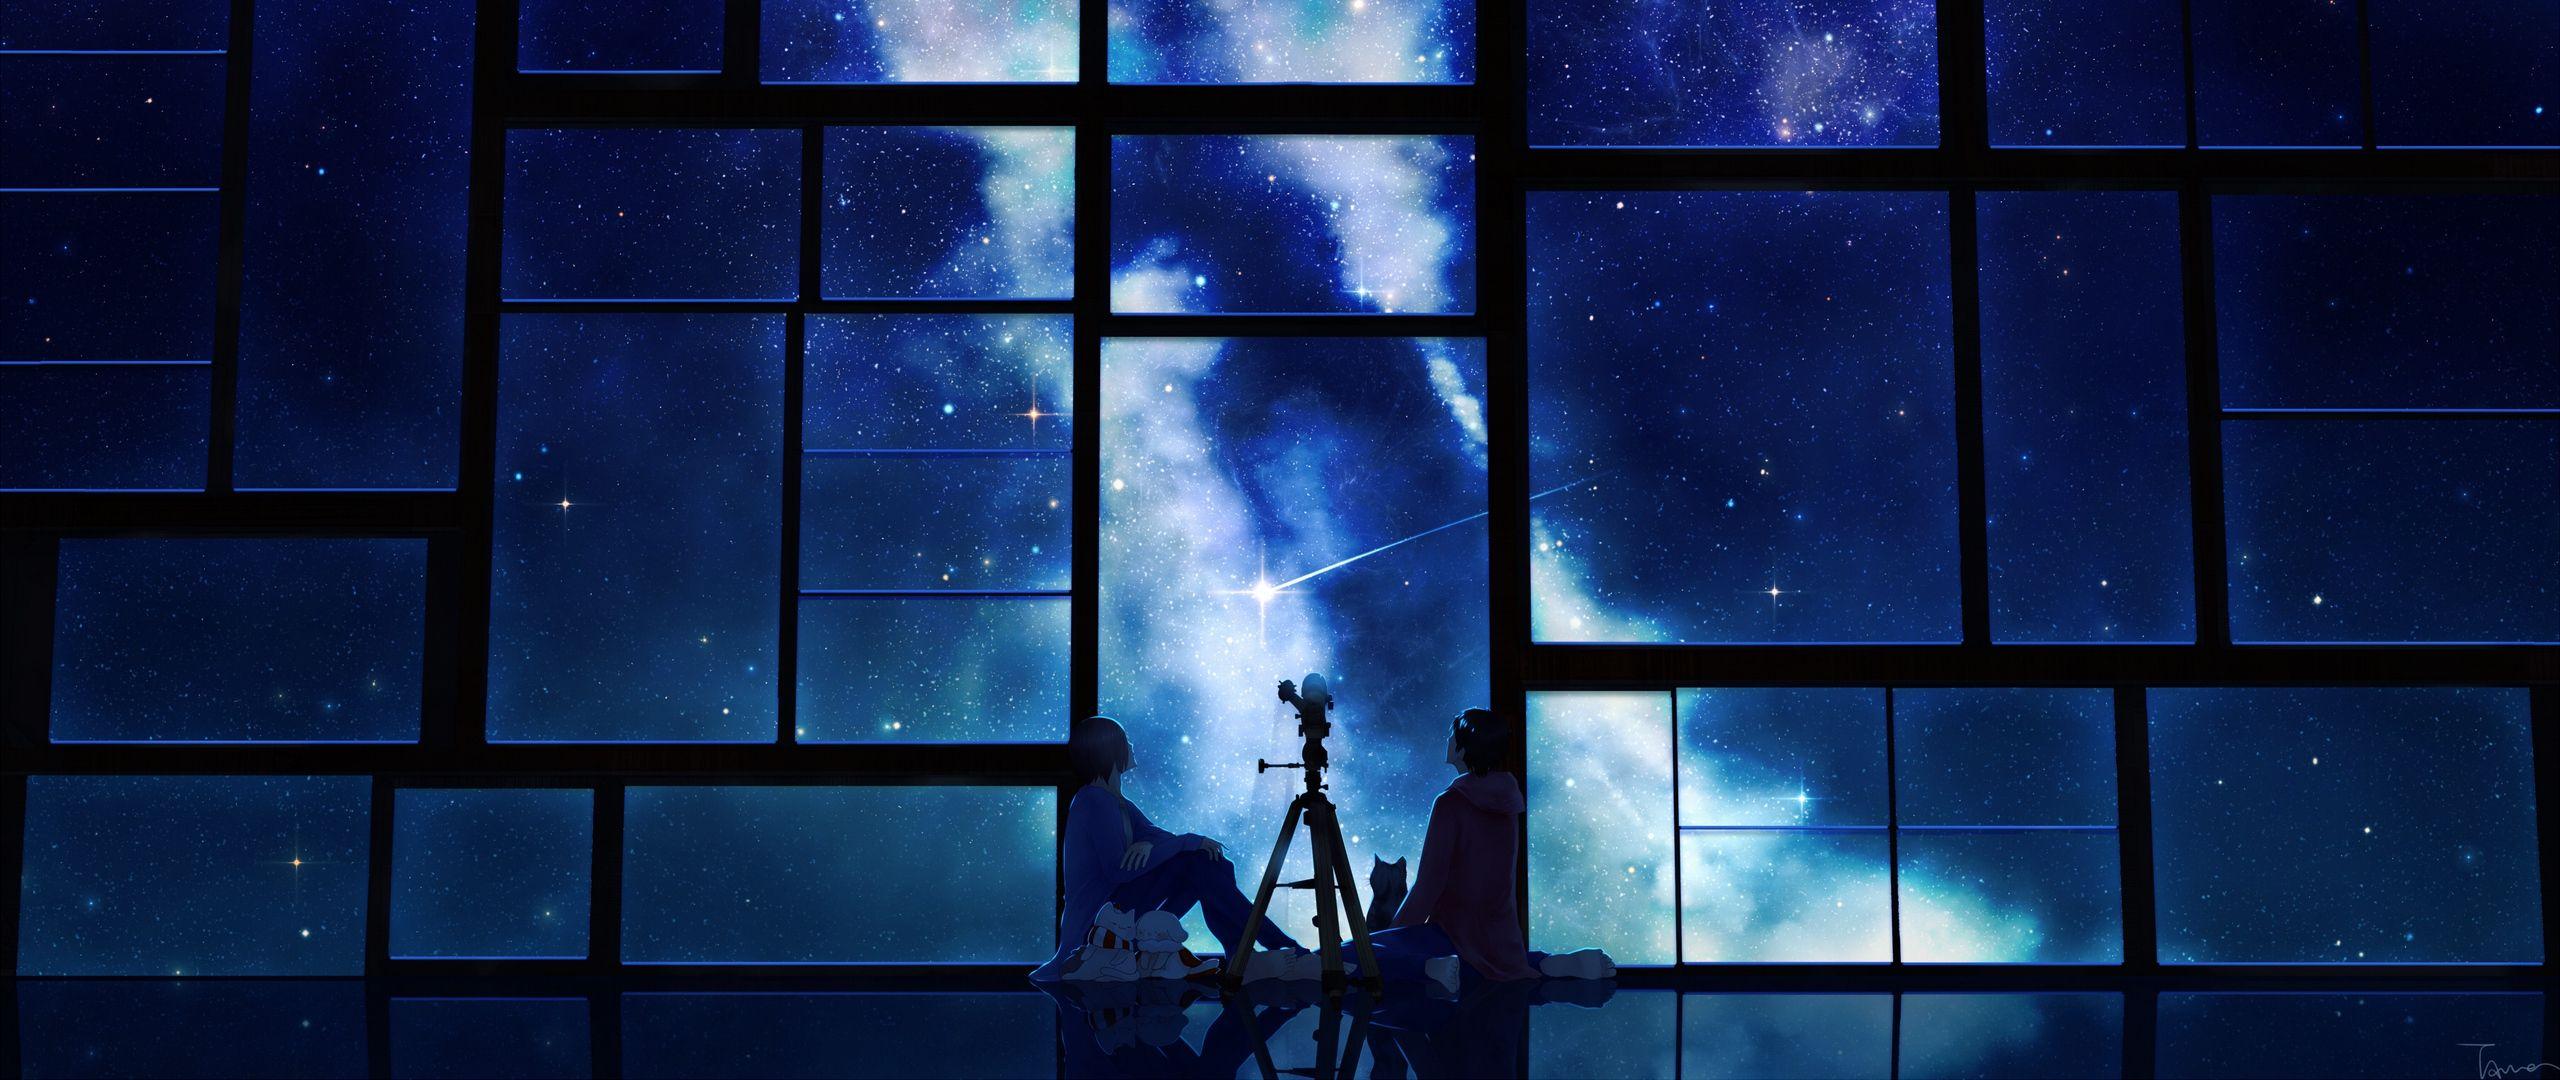 Download wallpaper 2560x1080 tamagosho, sky, stars, telescope, night